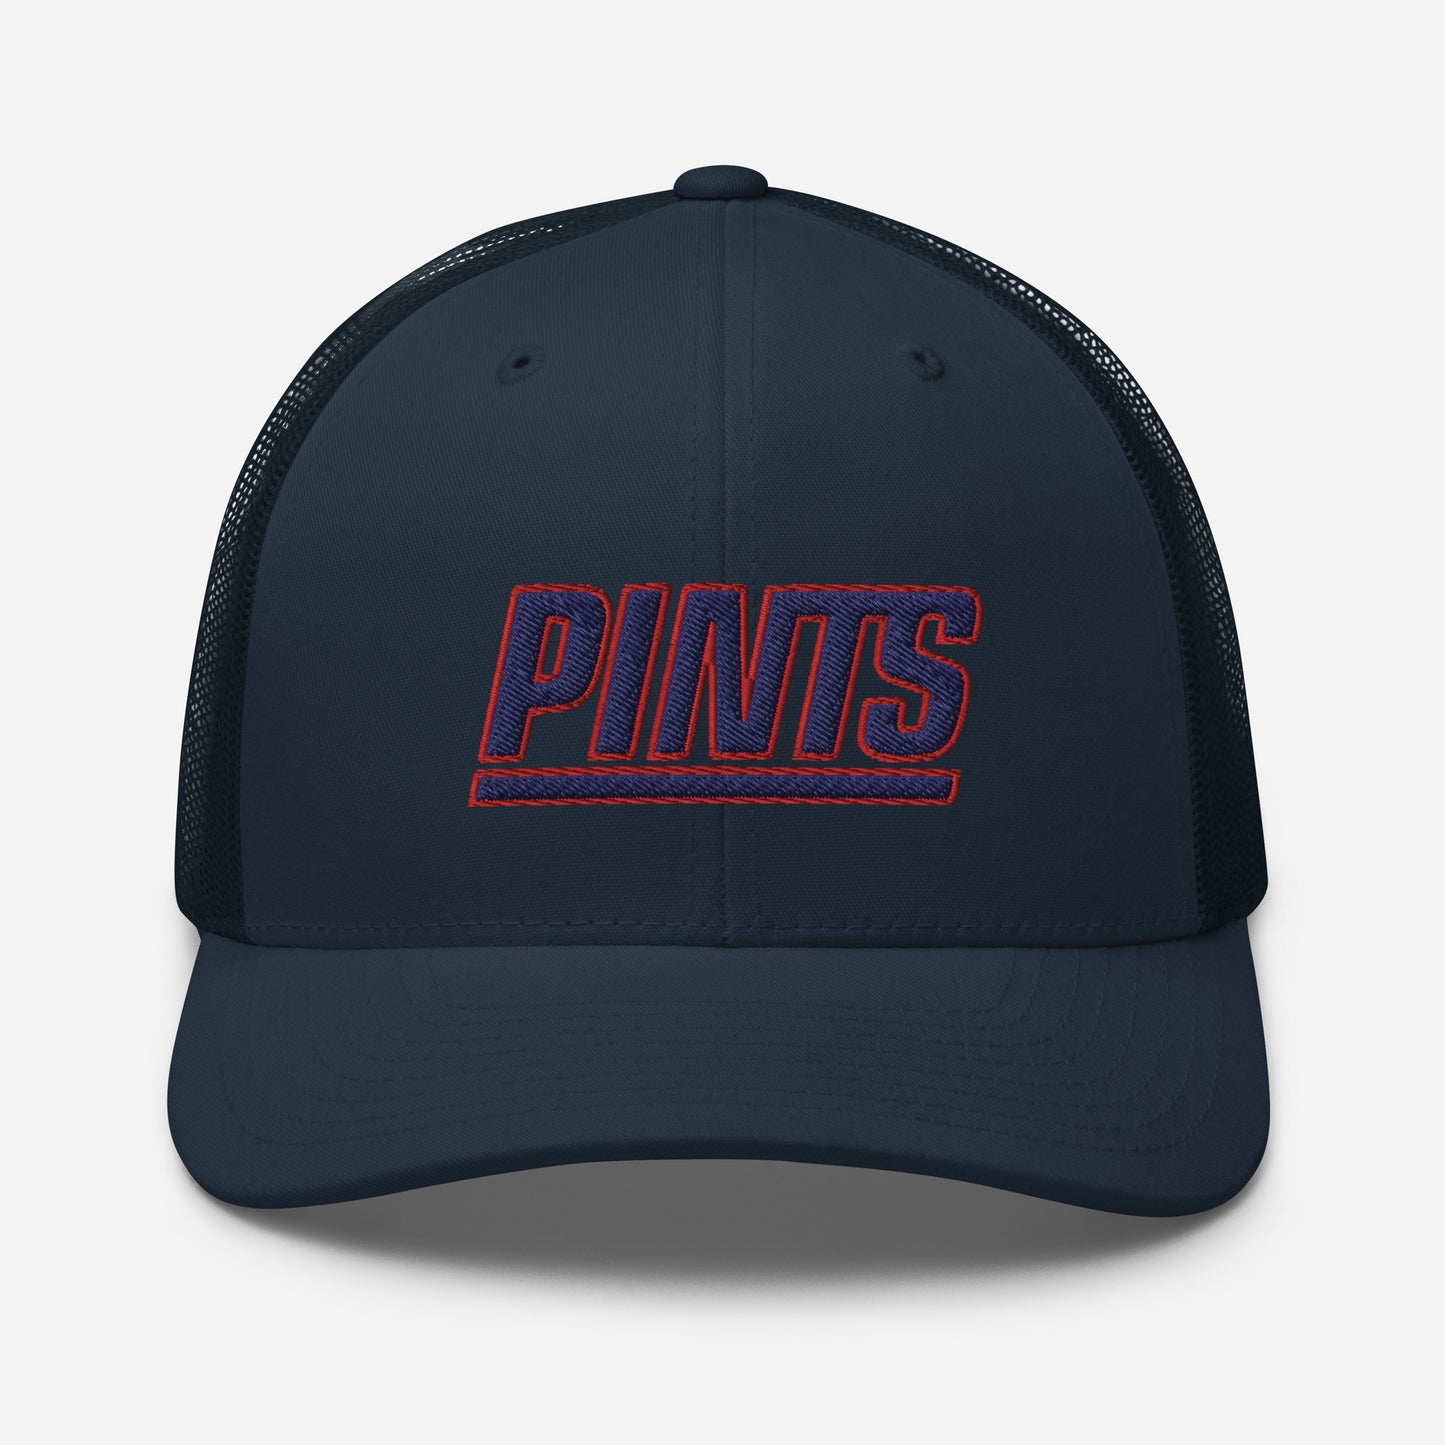 Pints Trucker Cap